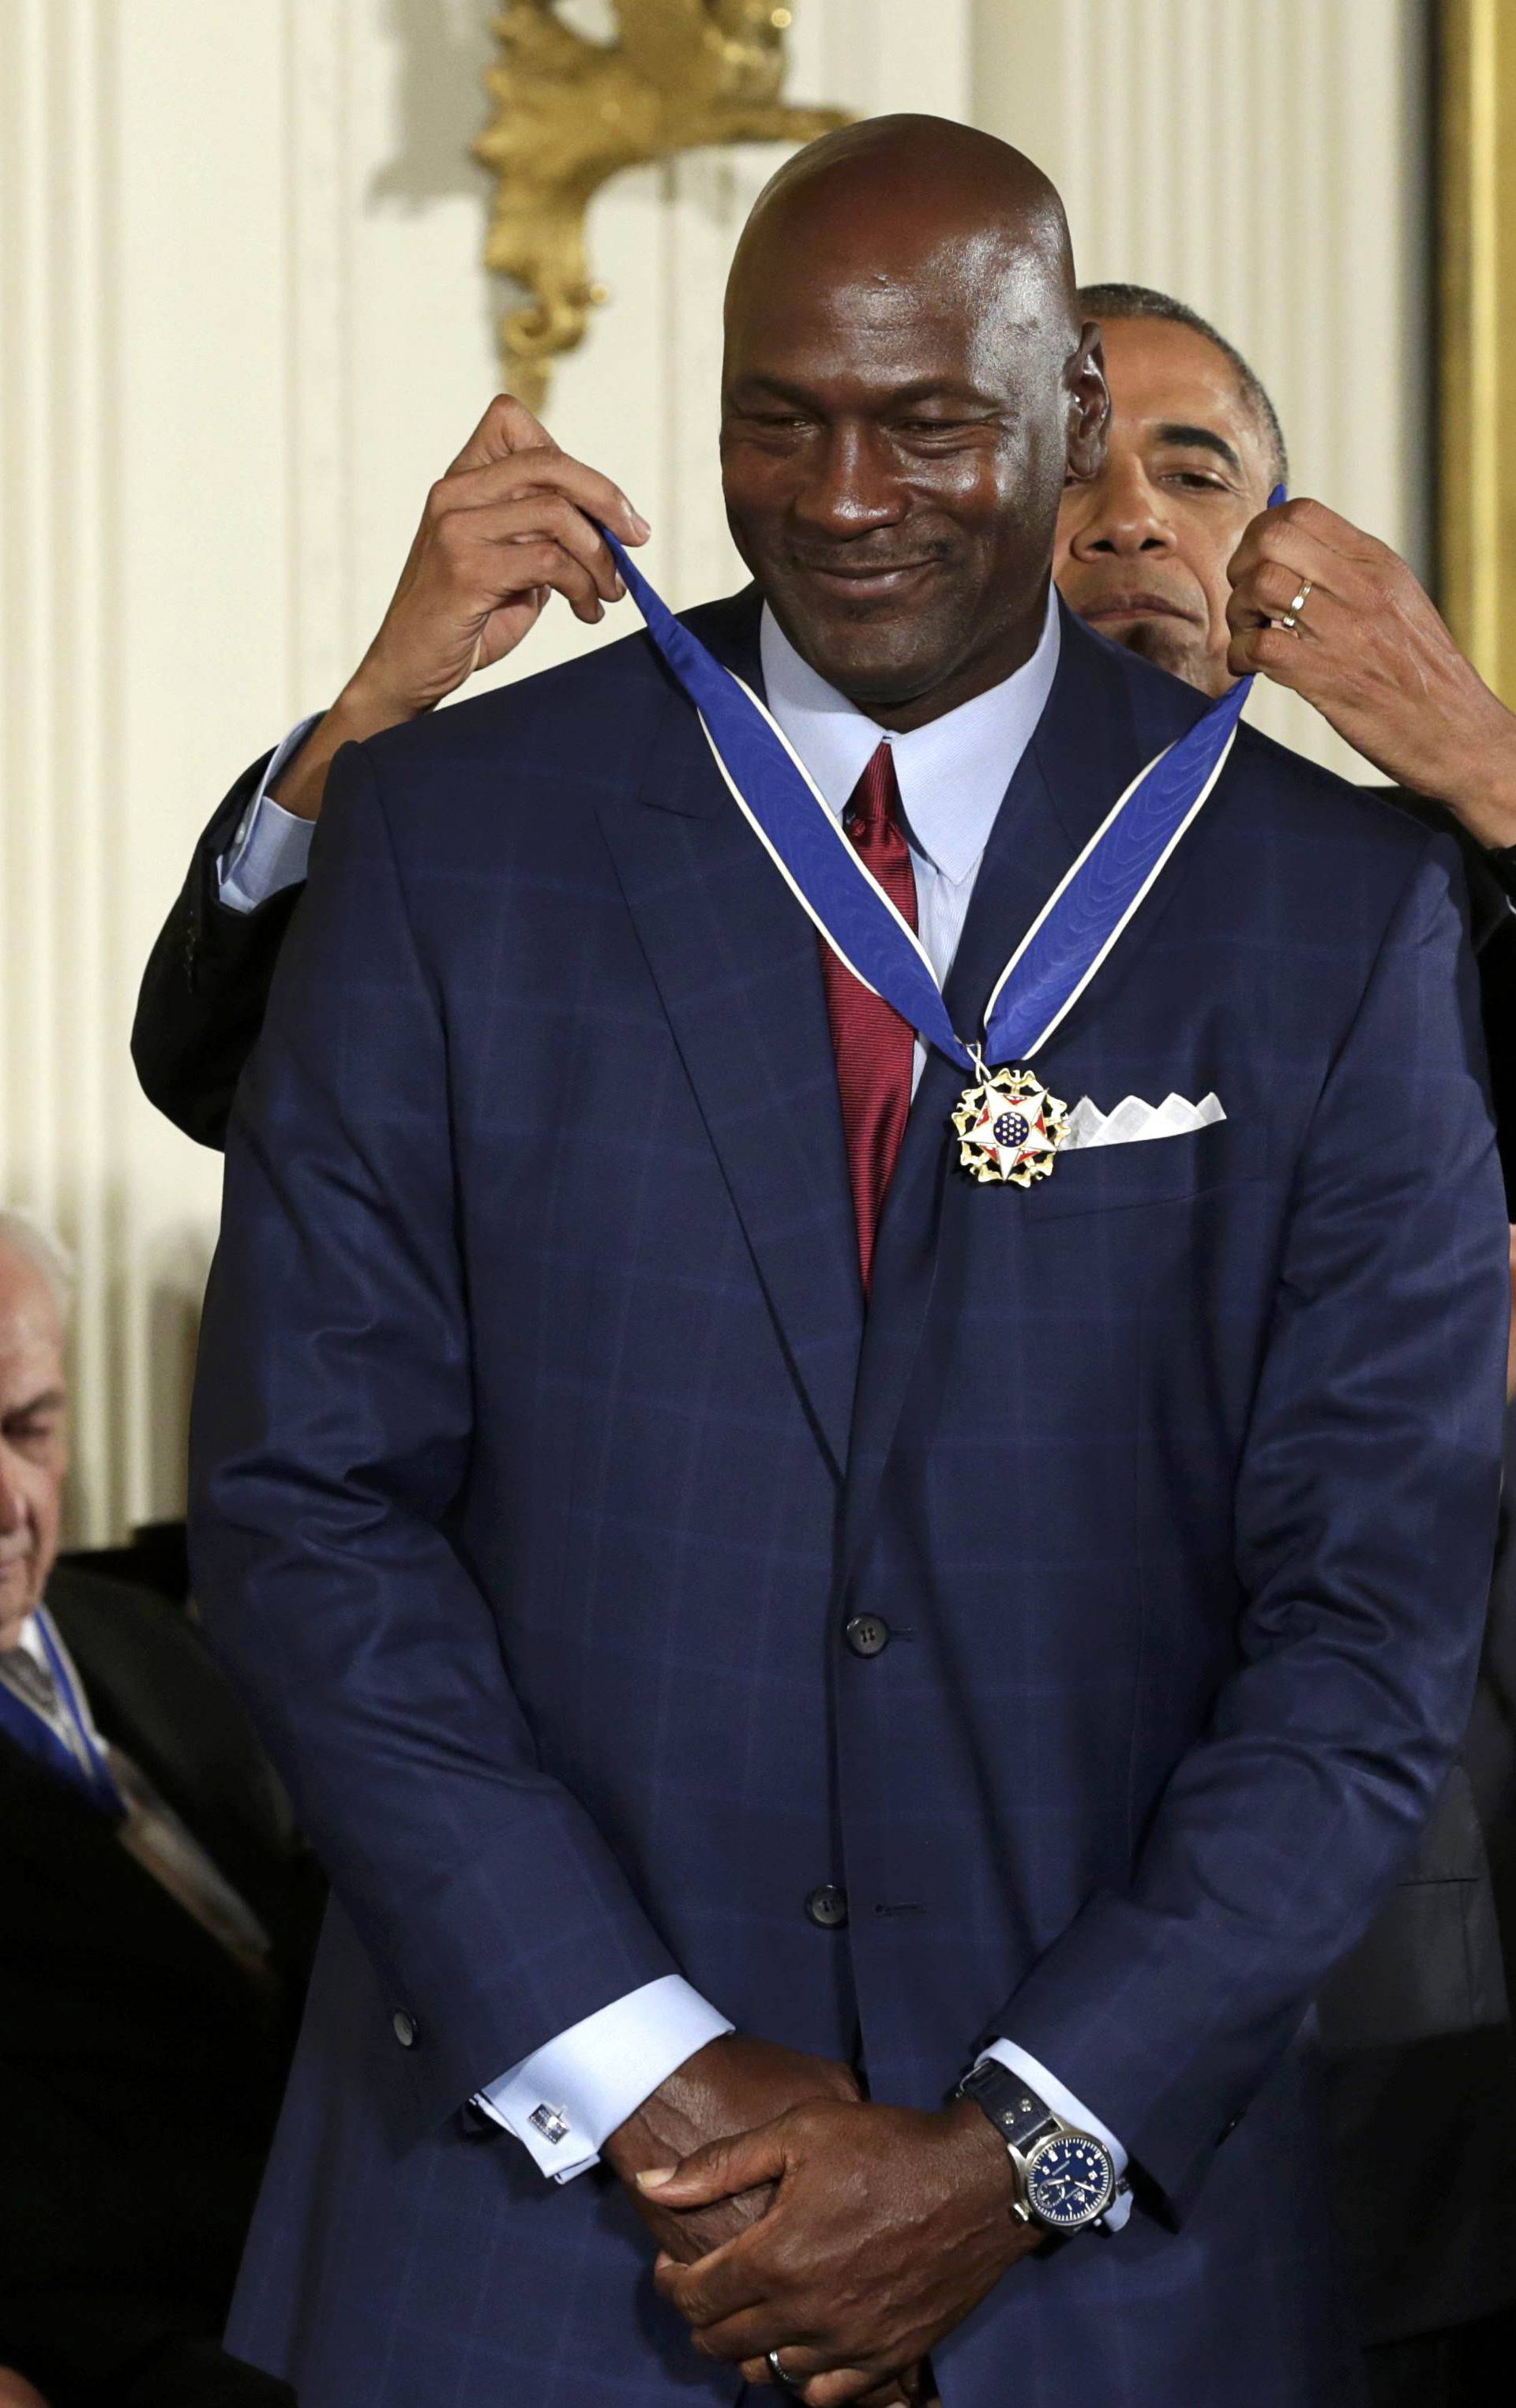 President Obama puts Presidential Medal of Freedom on NBA star Jordan at White House in Washington